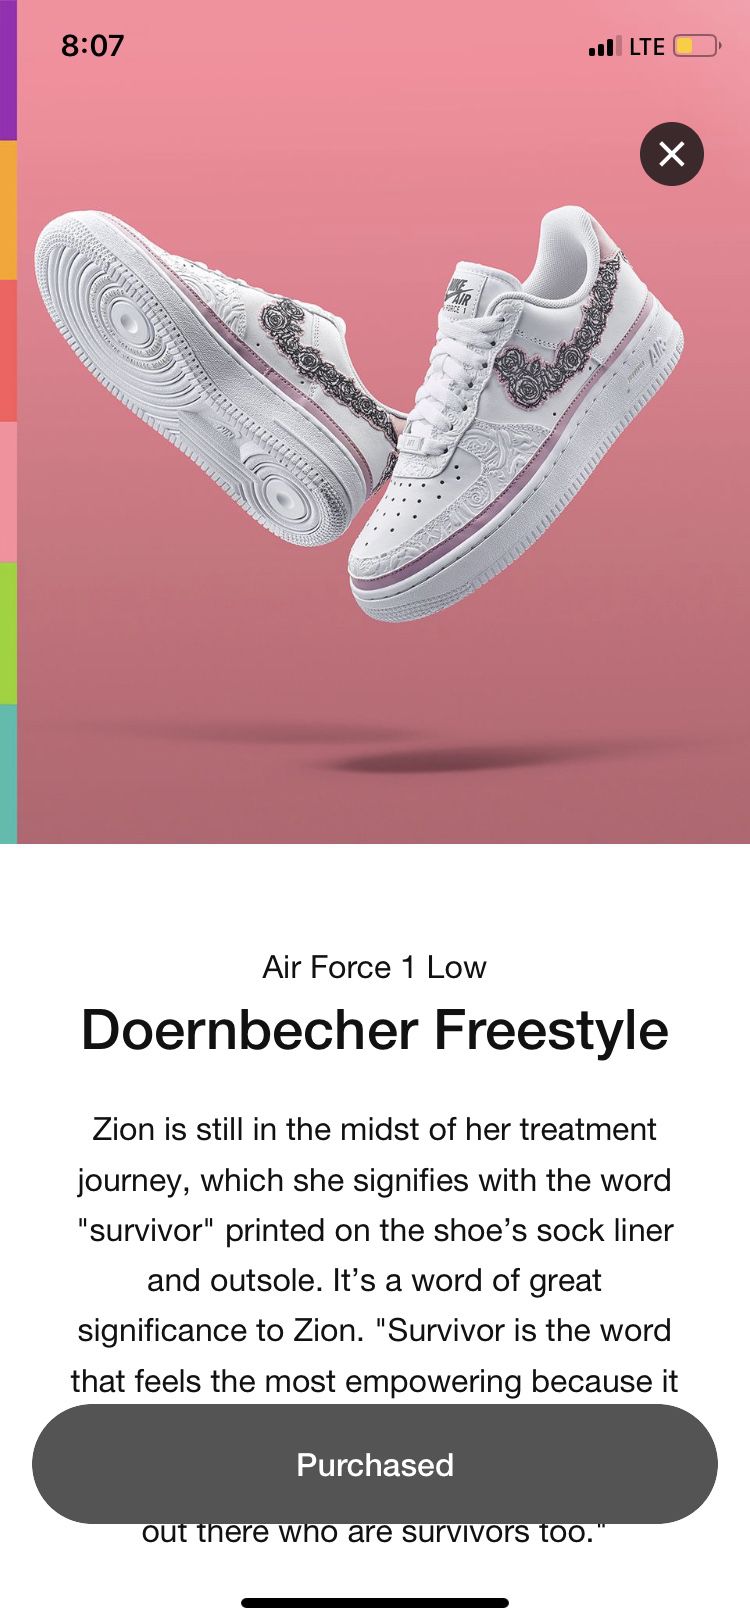 Nike Air Force 1 doernbecher freestyle